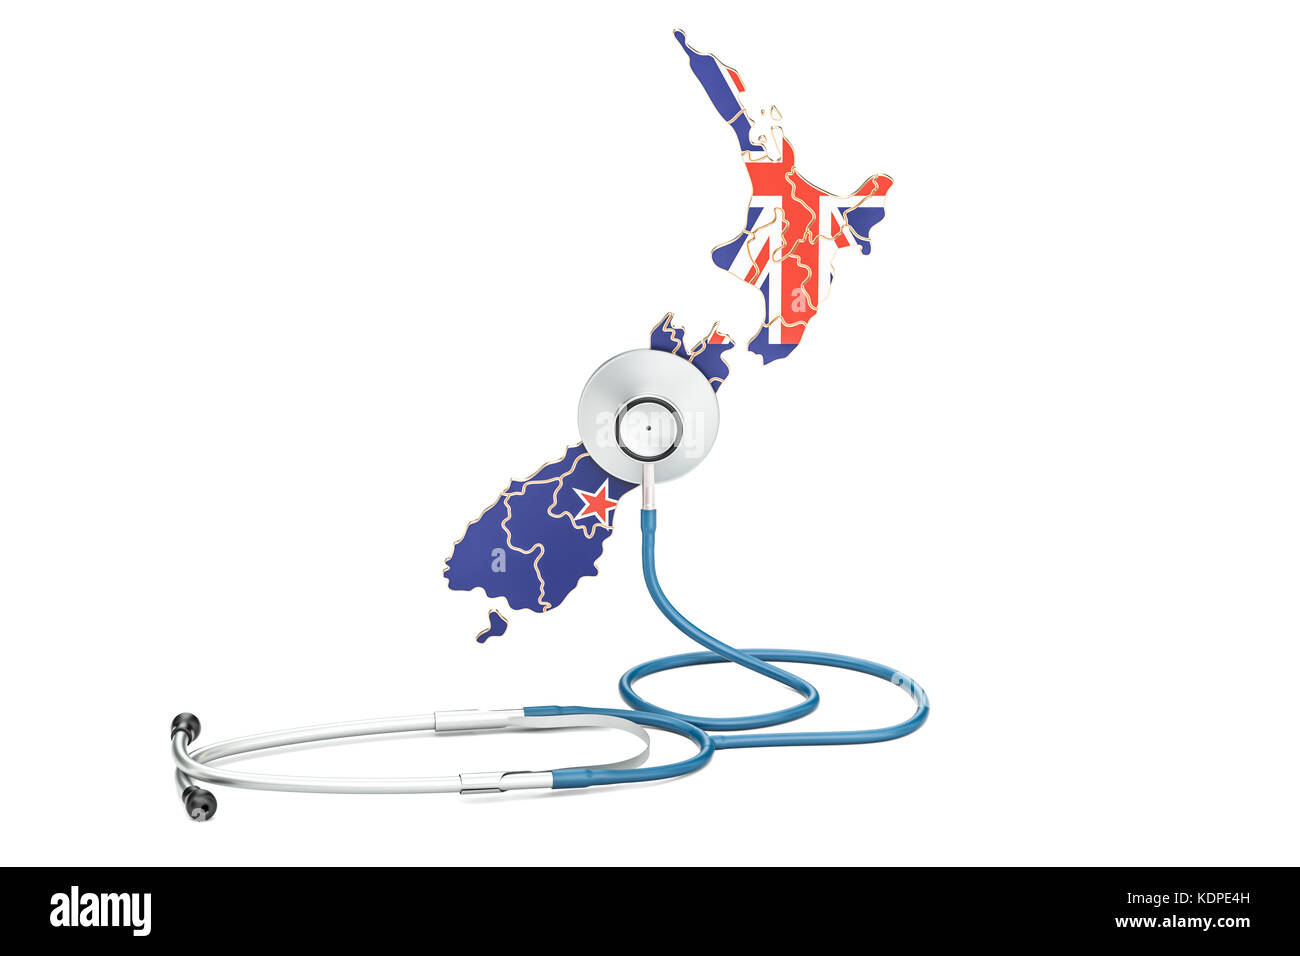 Neuseeland Karte mit Stethoskop, national Health Care Concept, 3D-Rendering Stockfoto